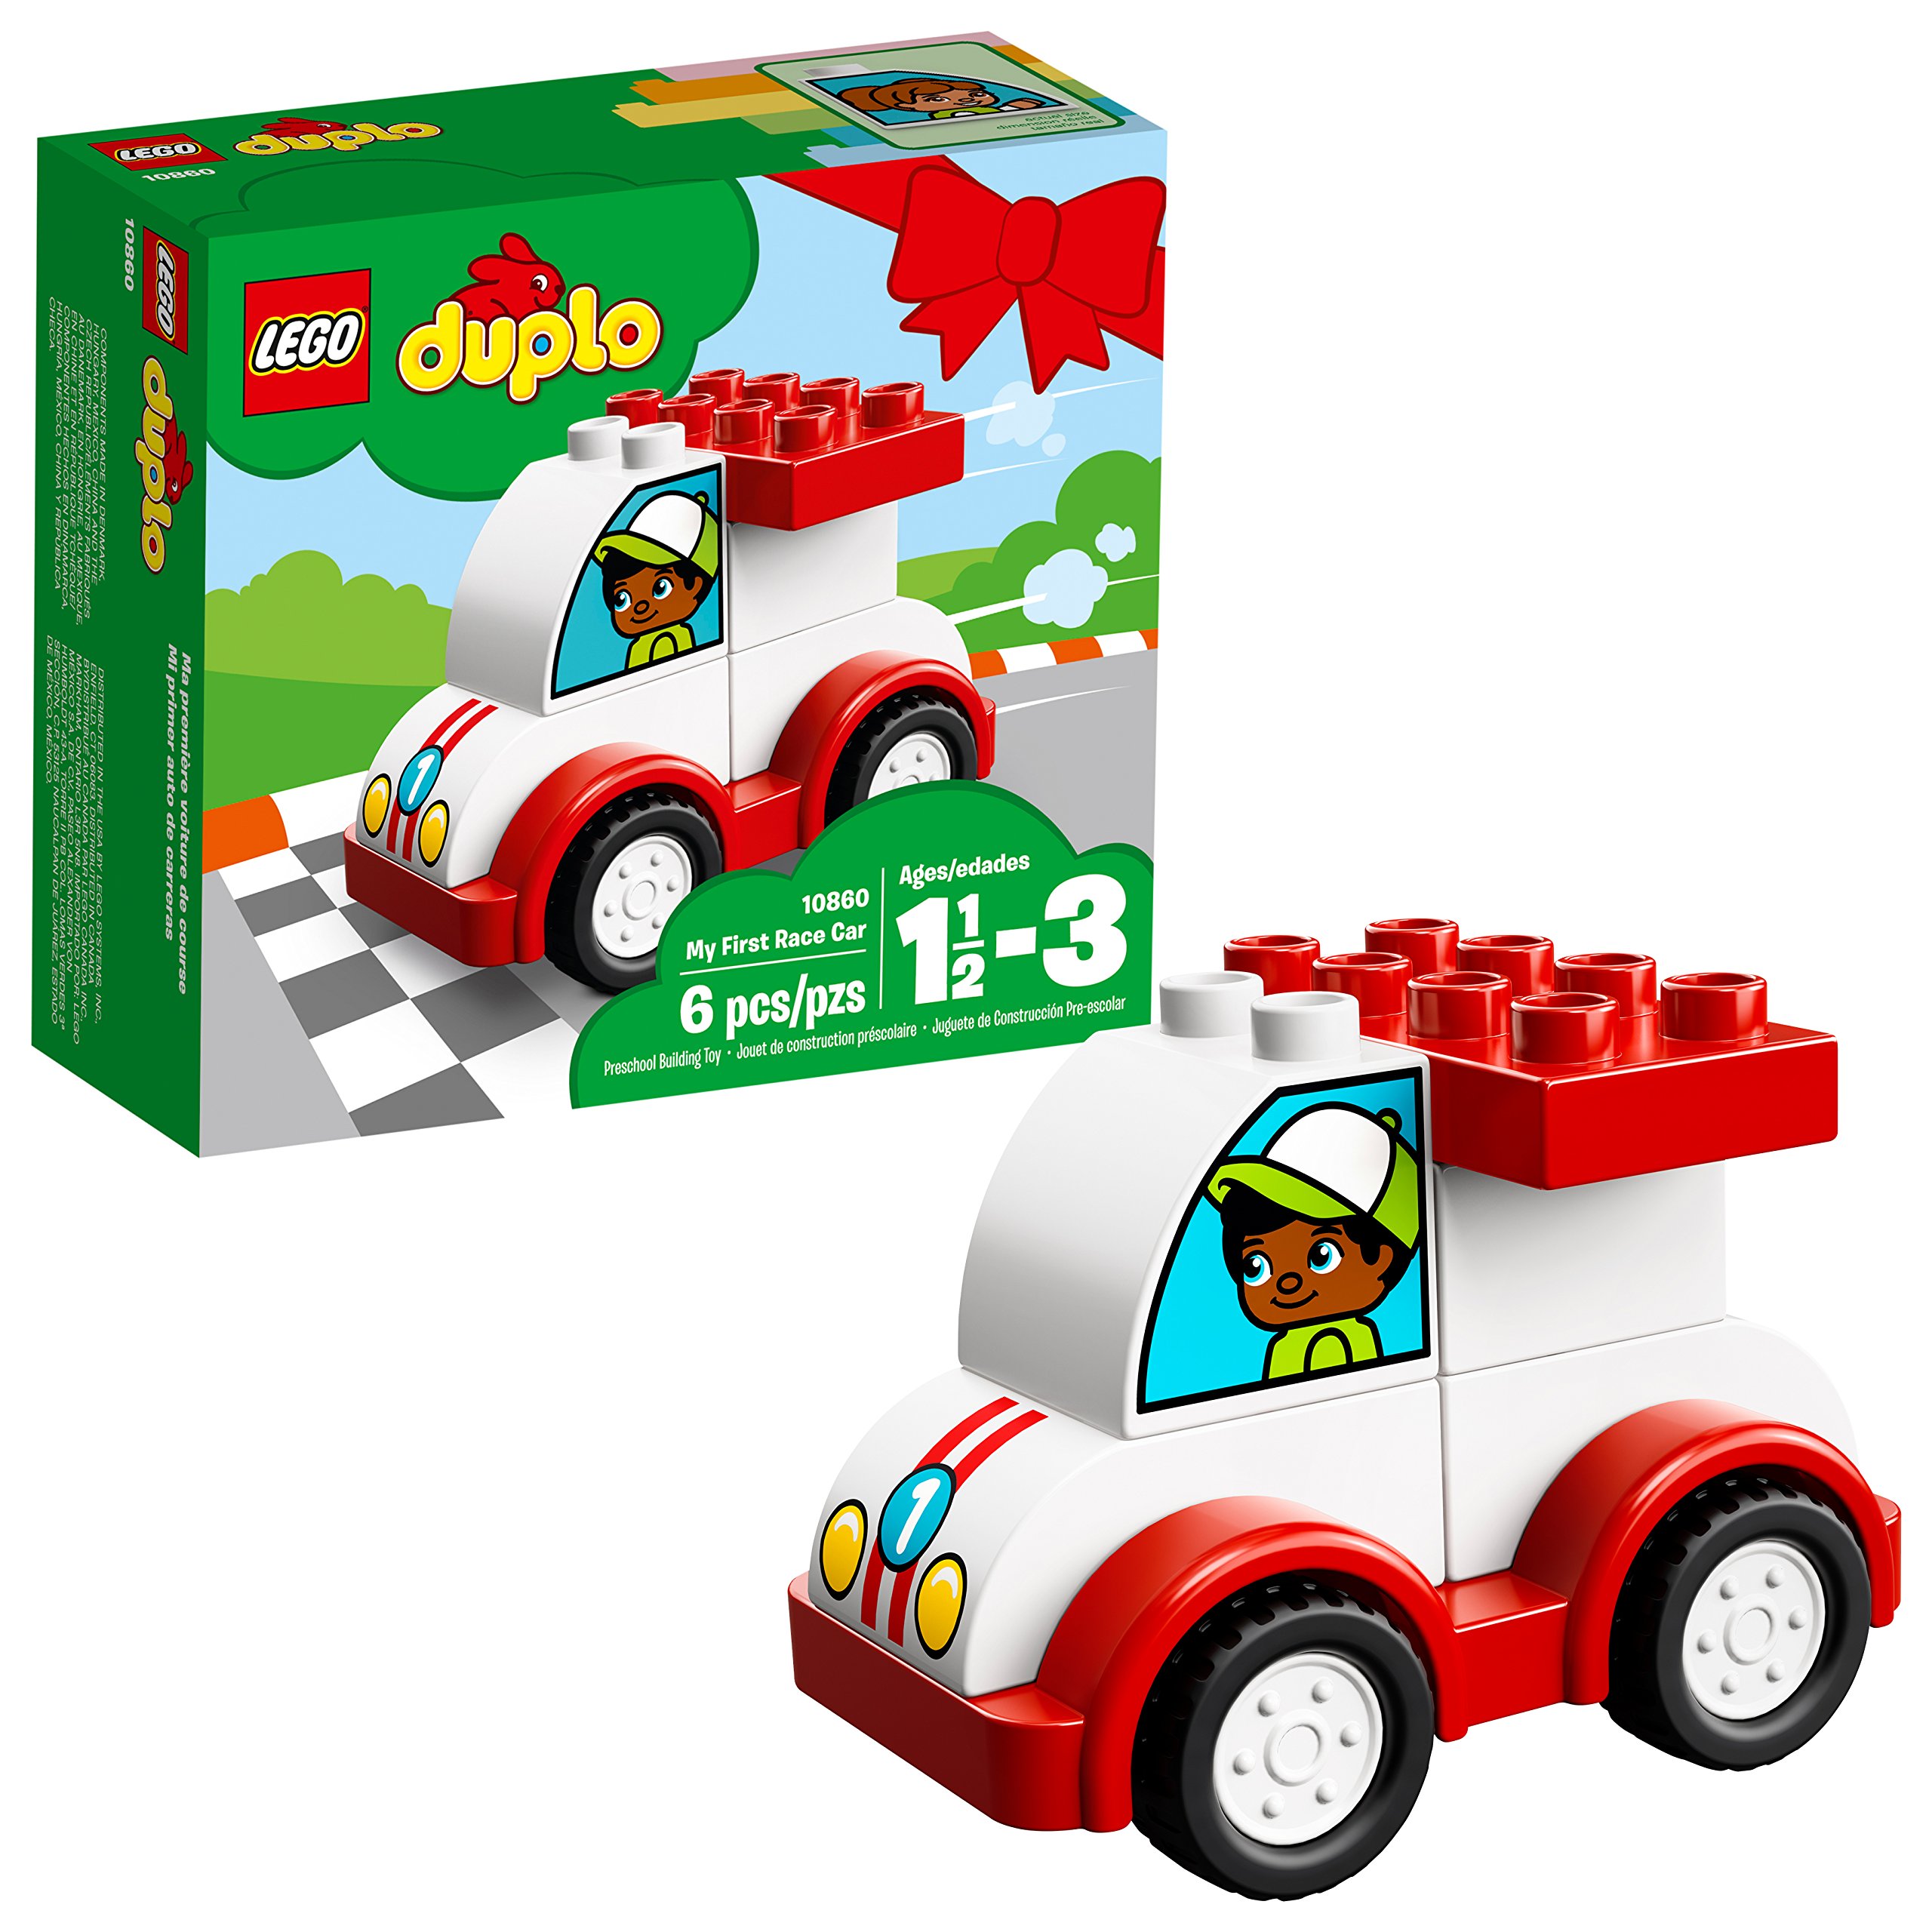 LEGO LEGO はじめてのデュプロ"レースカー"10860 LEGO duplo ブロックの商品画像